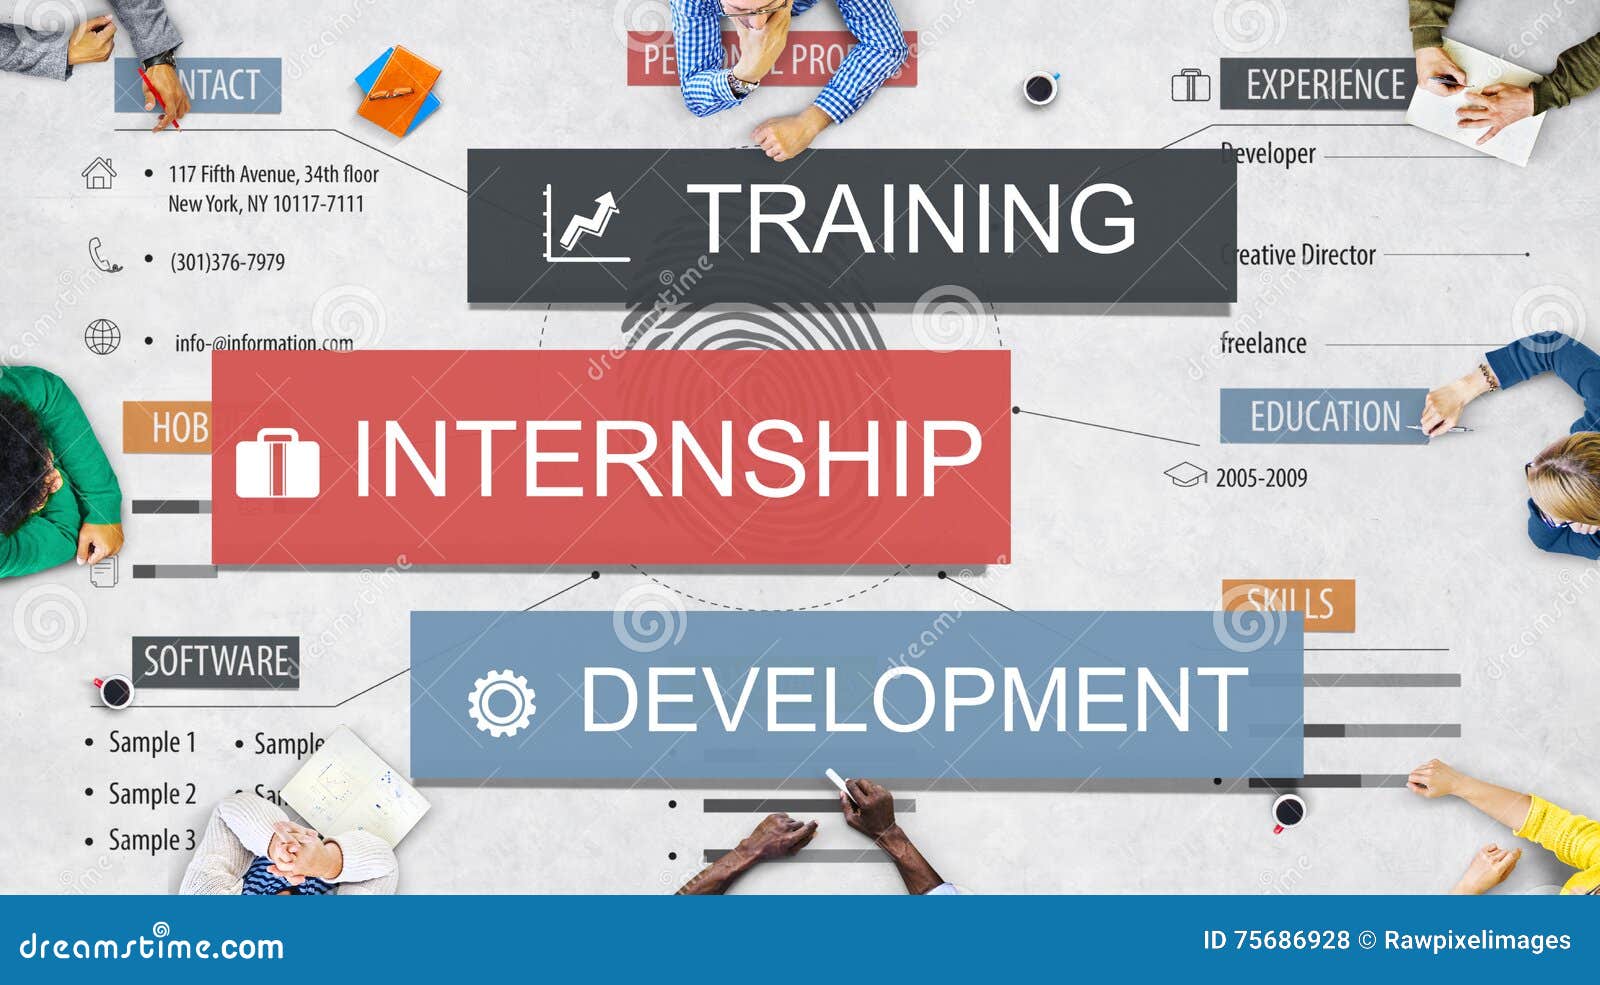 internship training development business knowledge concept